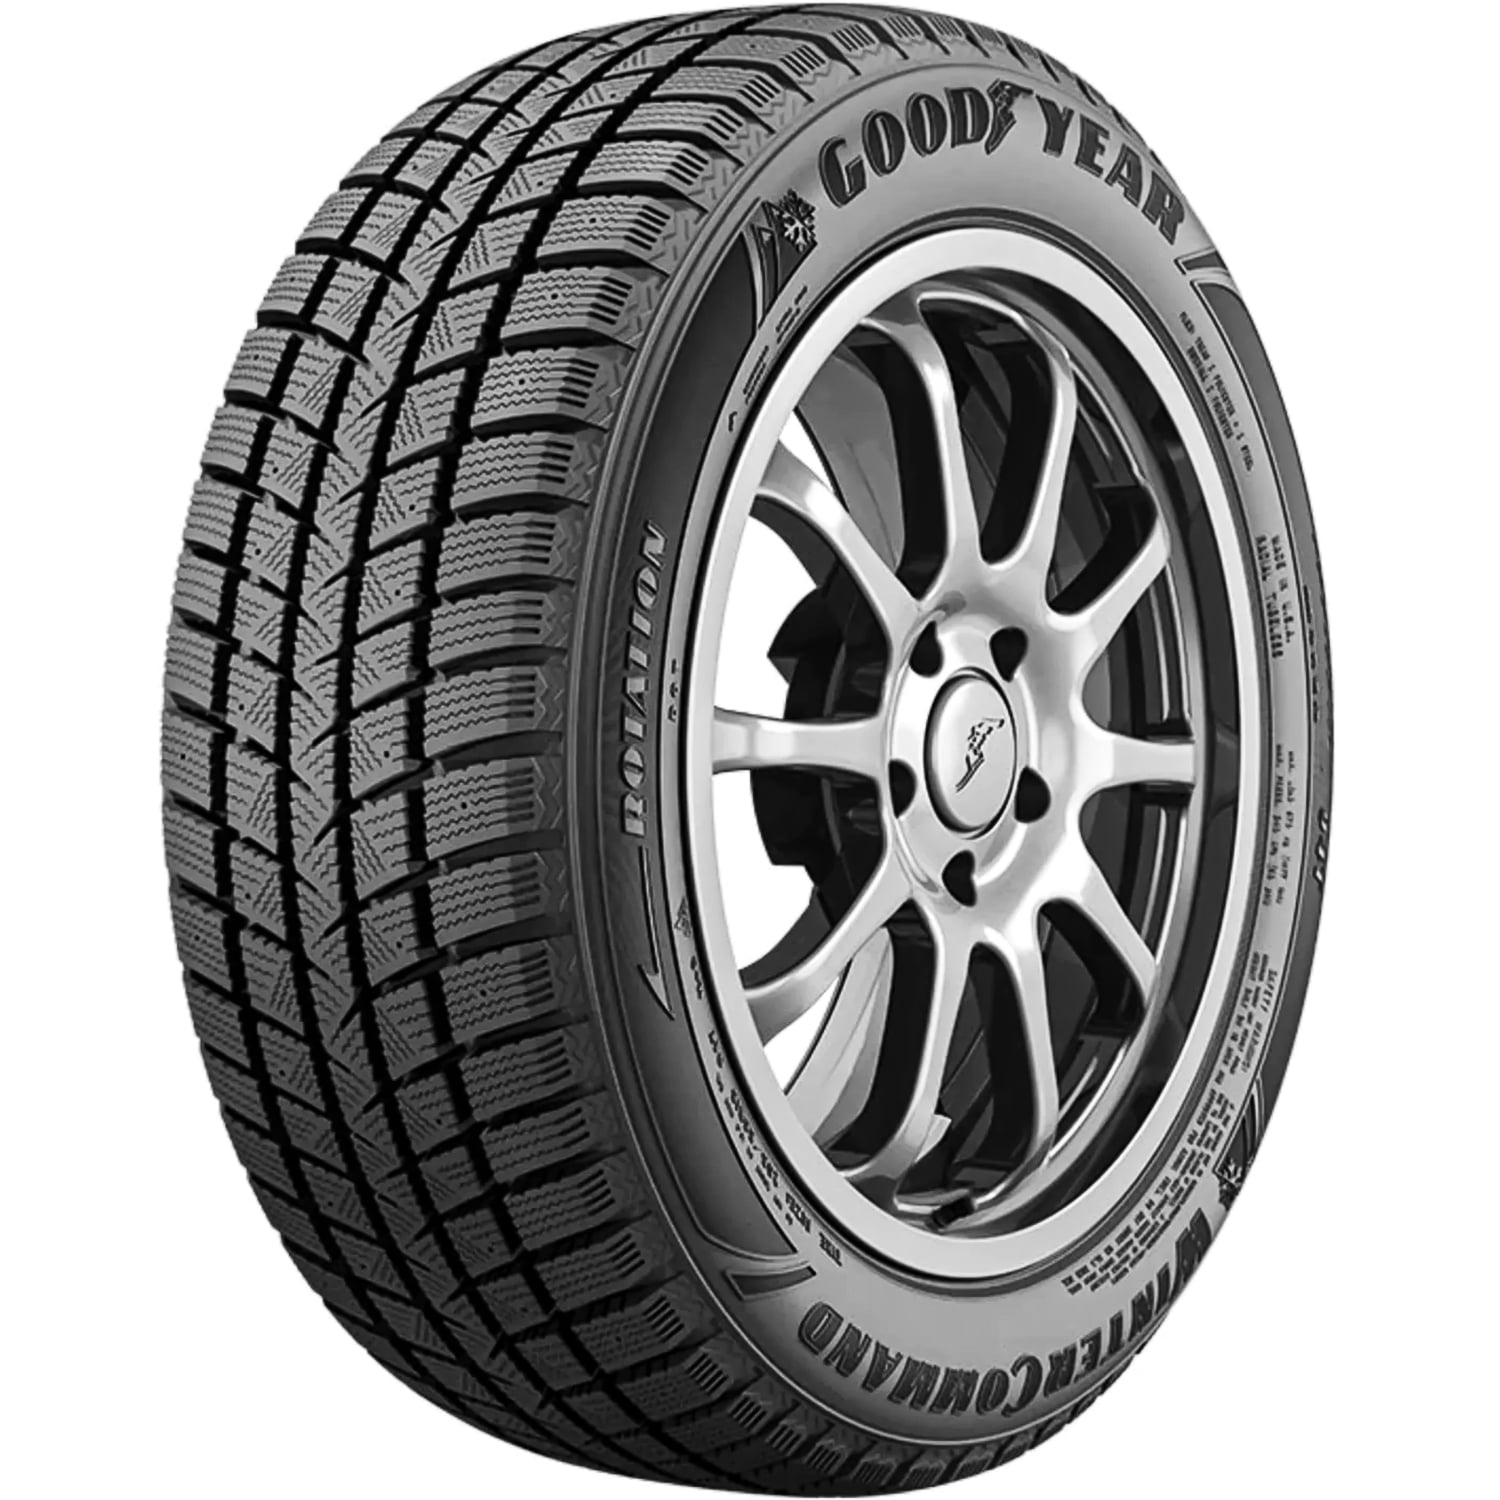 Goodyear Ultra Grip Winter Tires 235/55R17 99T 